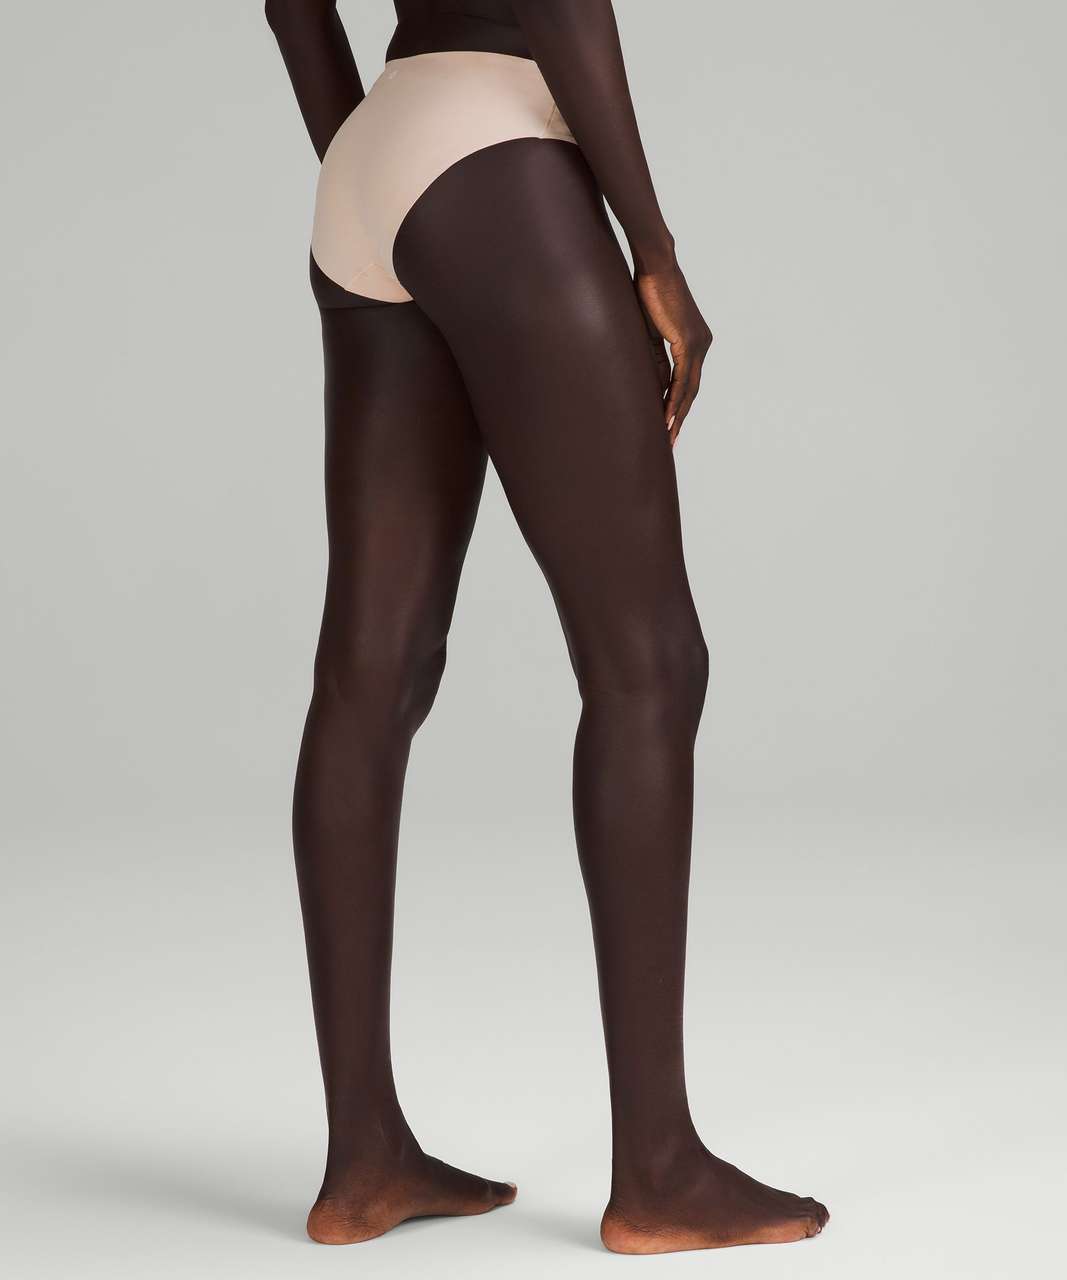 Lululemon InvisiWear Mid-Rise Bikini Underwear *5 Pack - French Press / Twilight Rose / Misty Shell / Pale Linen / Contour